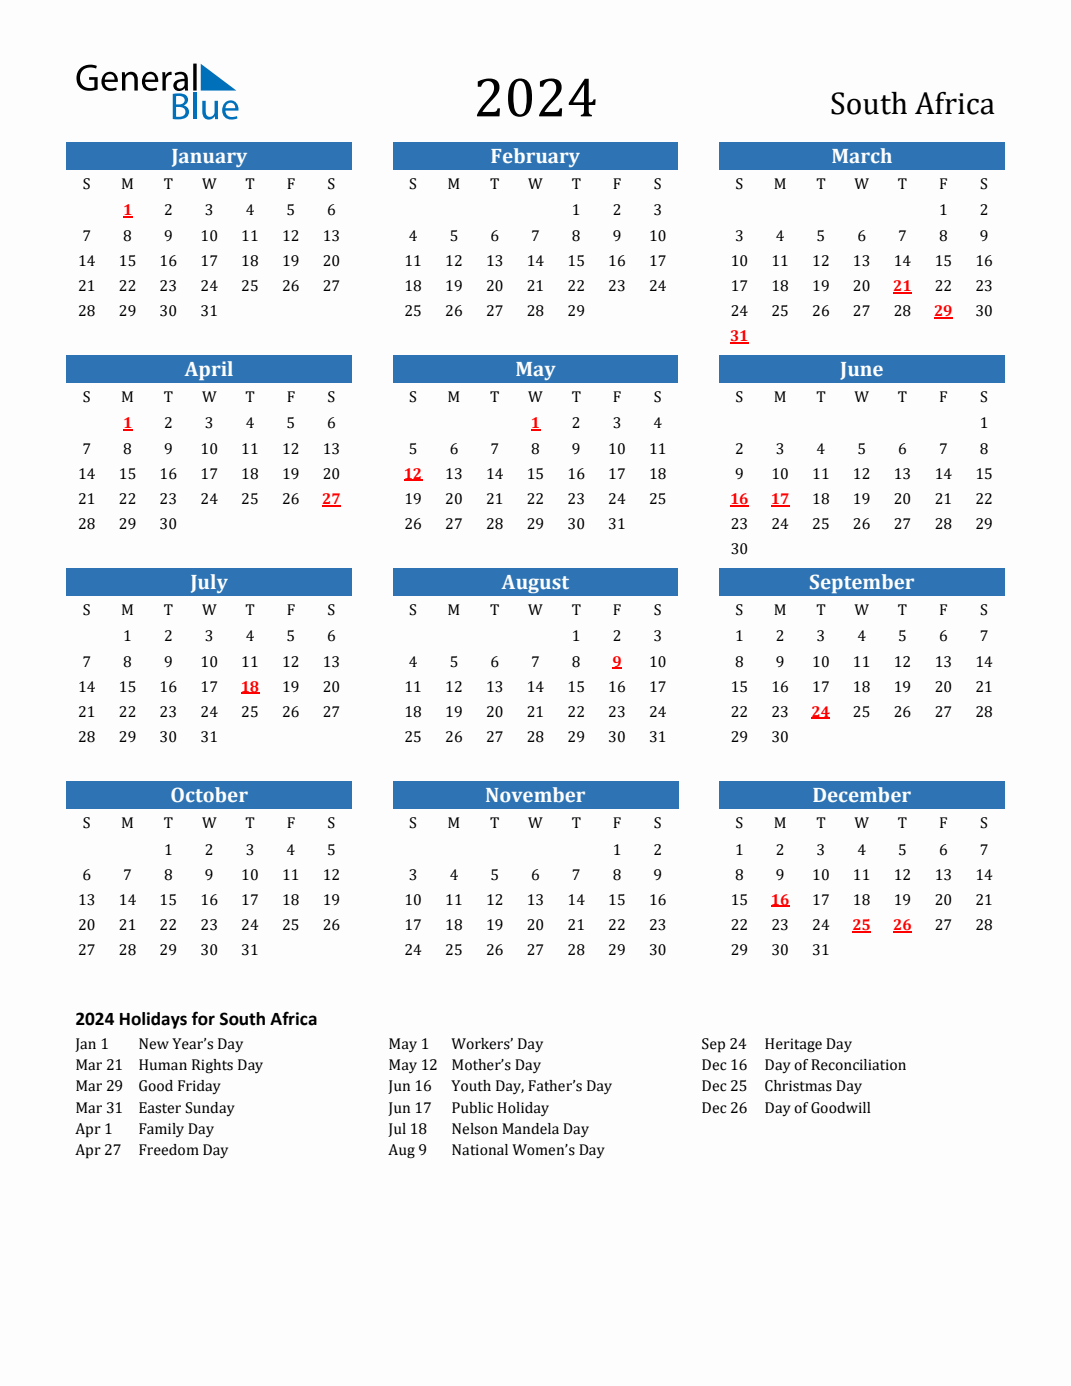 2024-south-africa-calendar-with-holidays